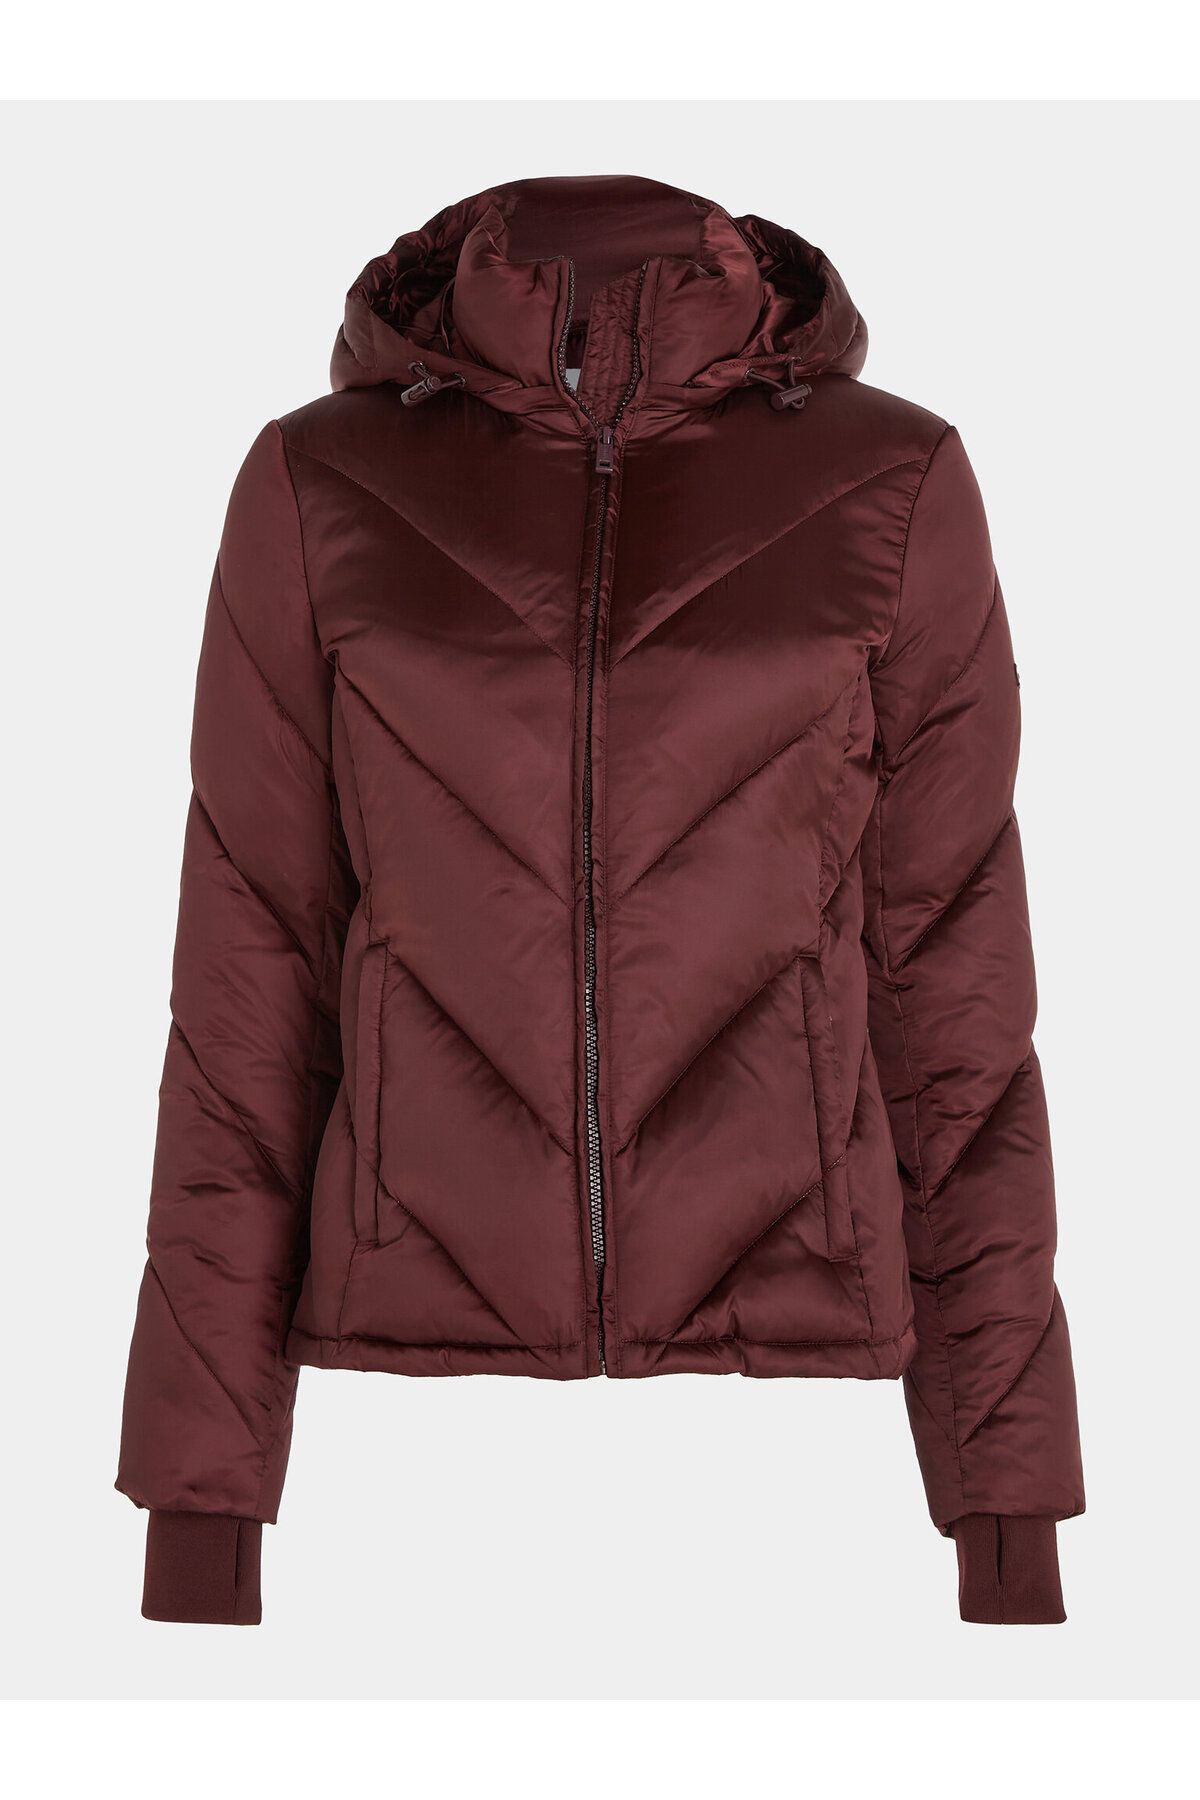 Calvin Klein Winter Jacket fit - - - Burgundy Trendyol Relaxed